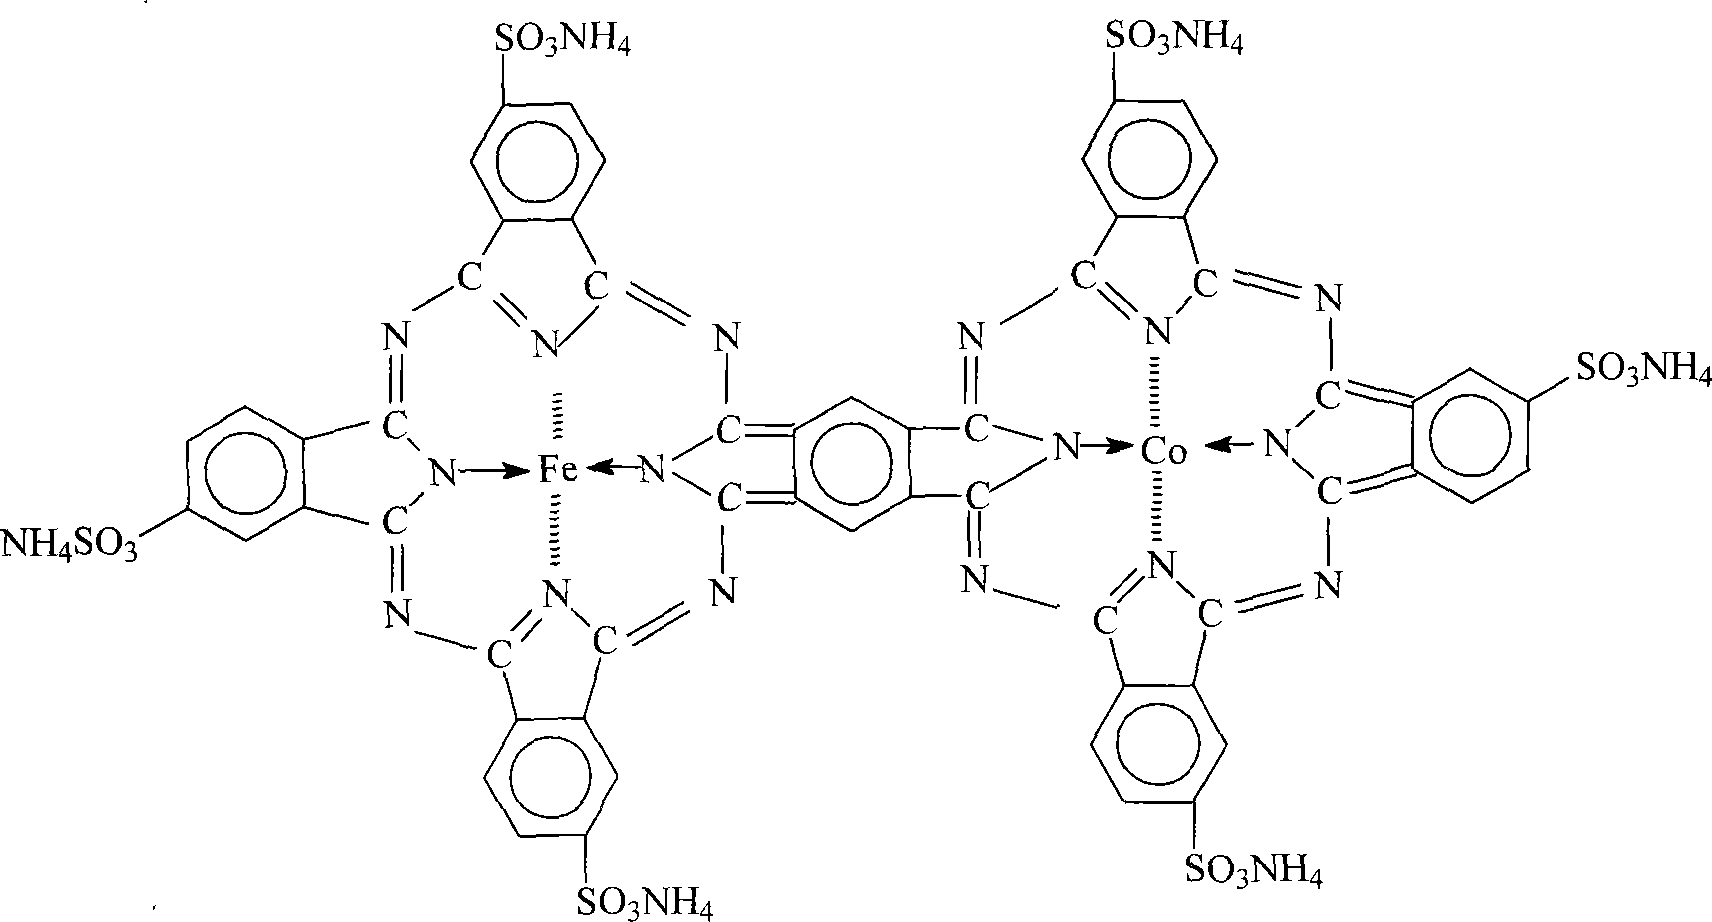 Desulphurization catalyst of sulfosalt of phthalocyanine iron cobalt, and preparation method